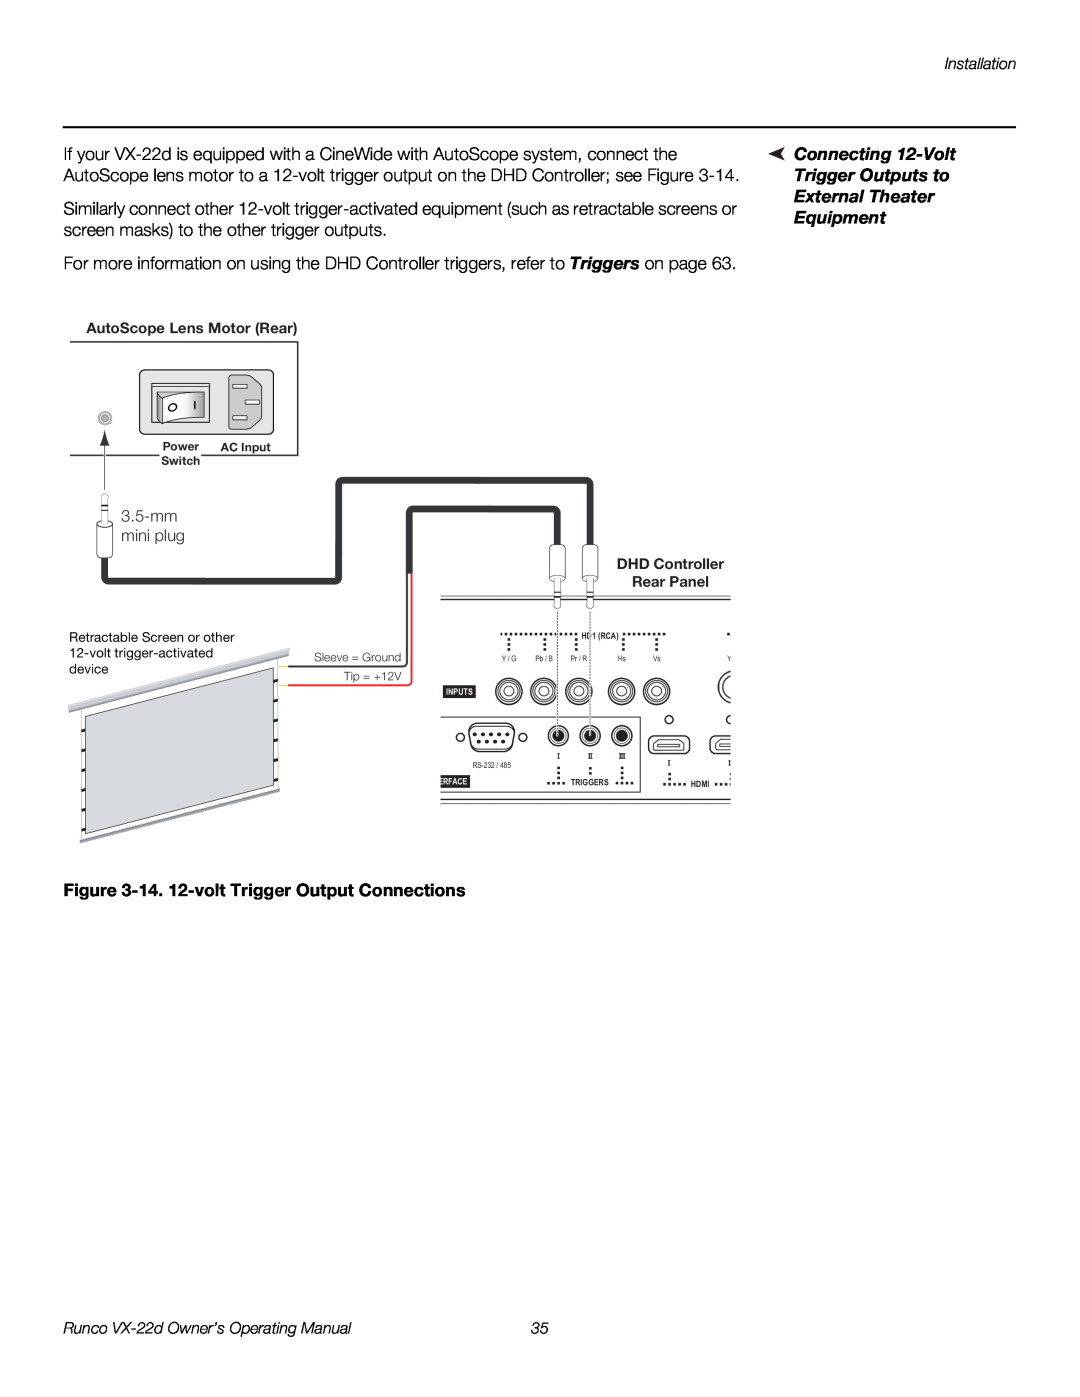 Runco VX-22D Connecting 12-Volt Trigger Outputs to External Theater Equipment, 14. 12-volt Trigger Output Connections 